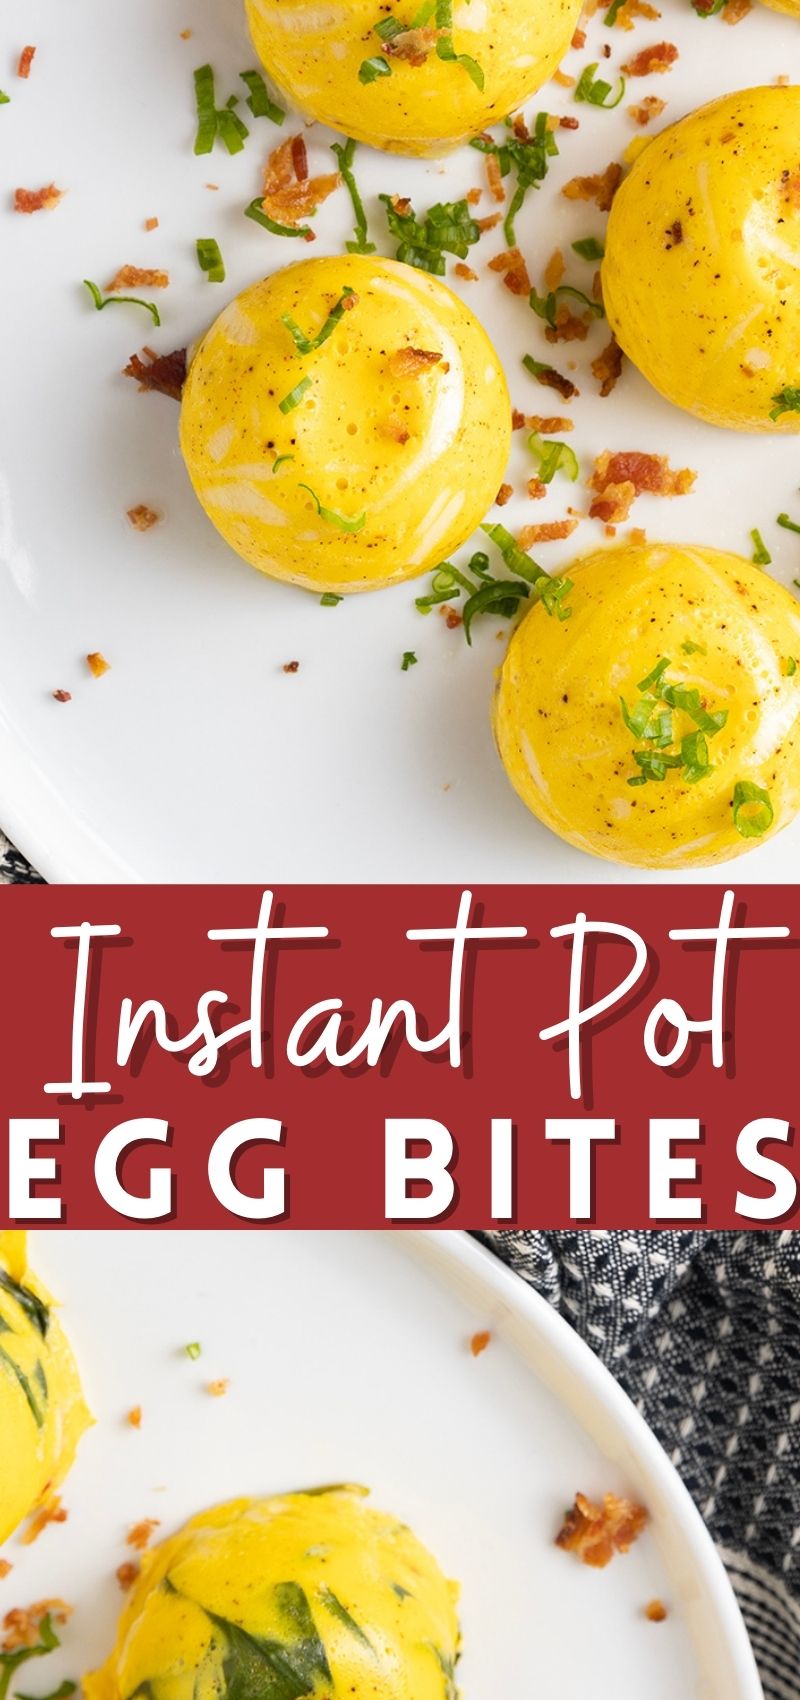 Instant Pot Egg Bites • Starbucks Copycat Recipe